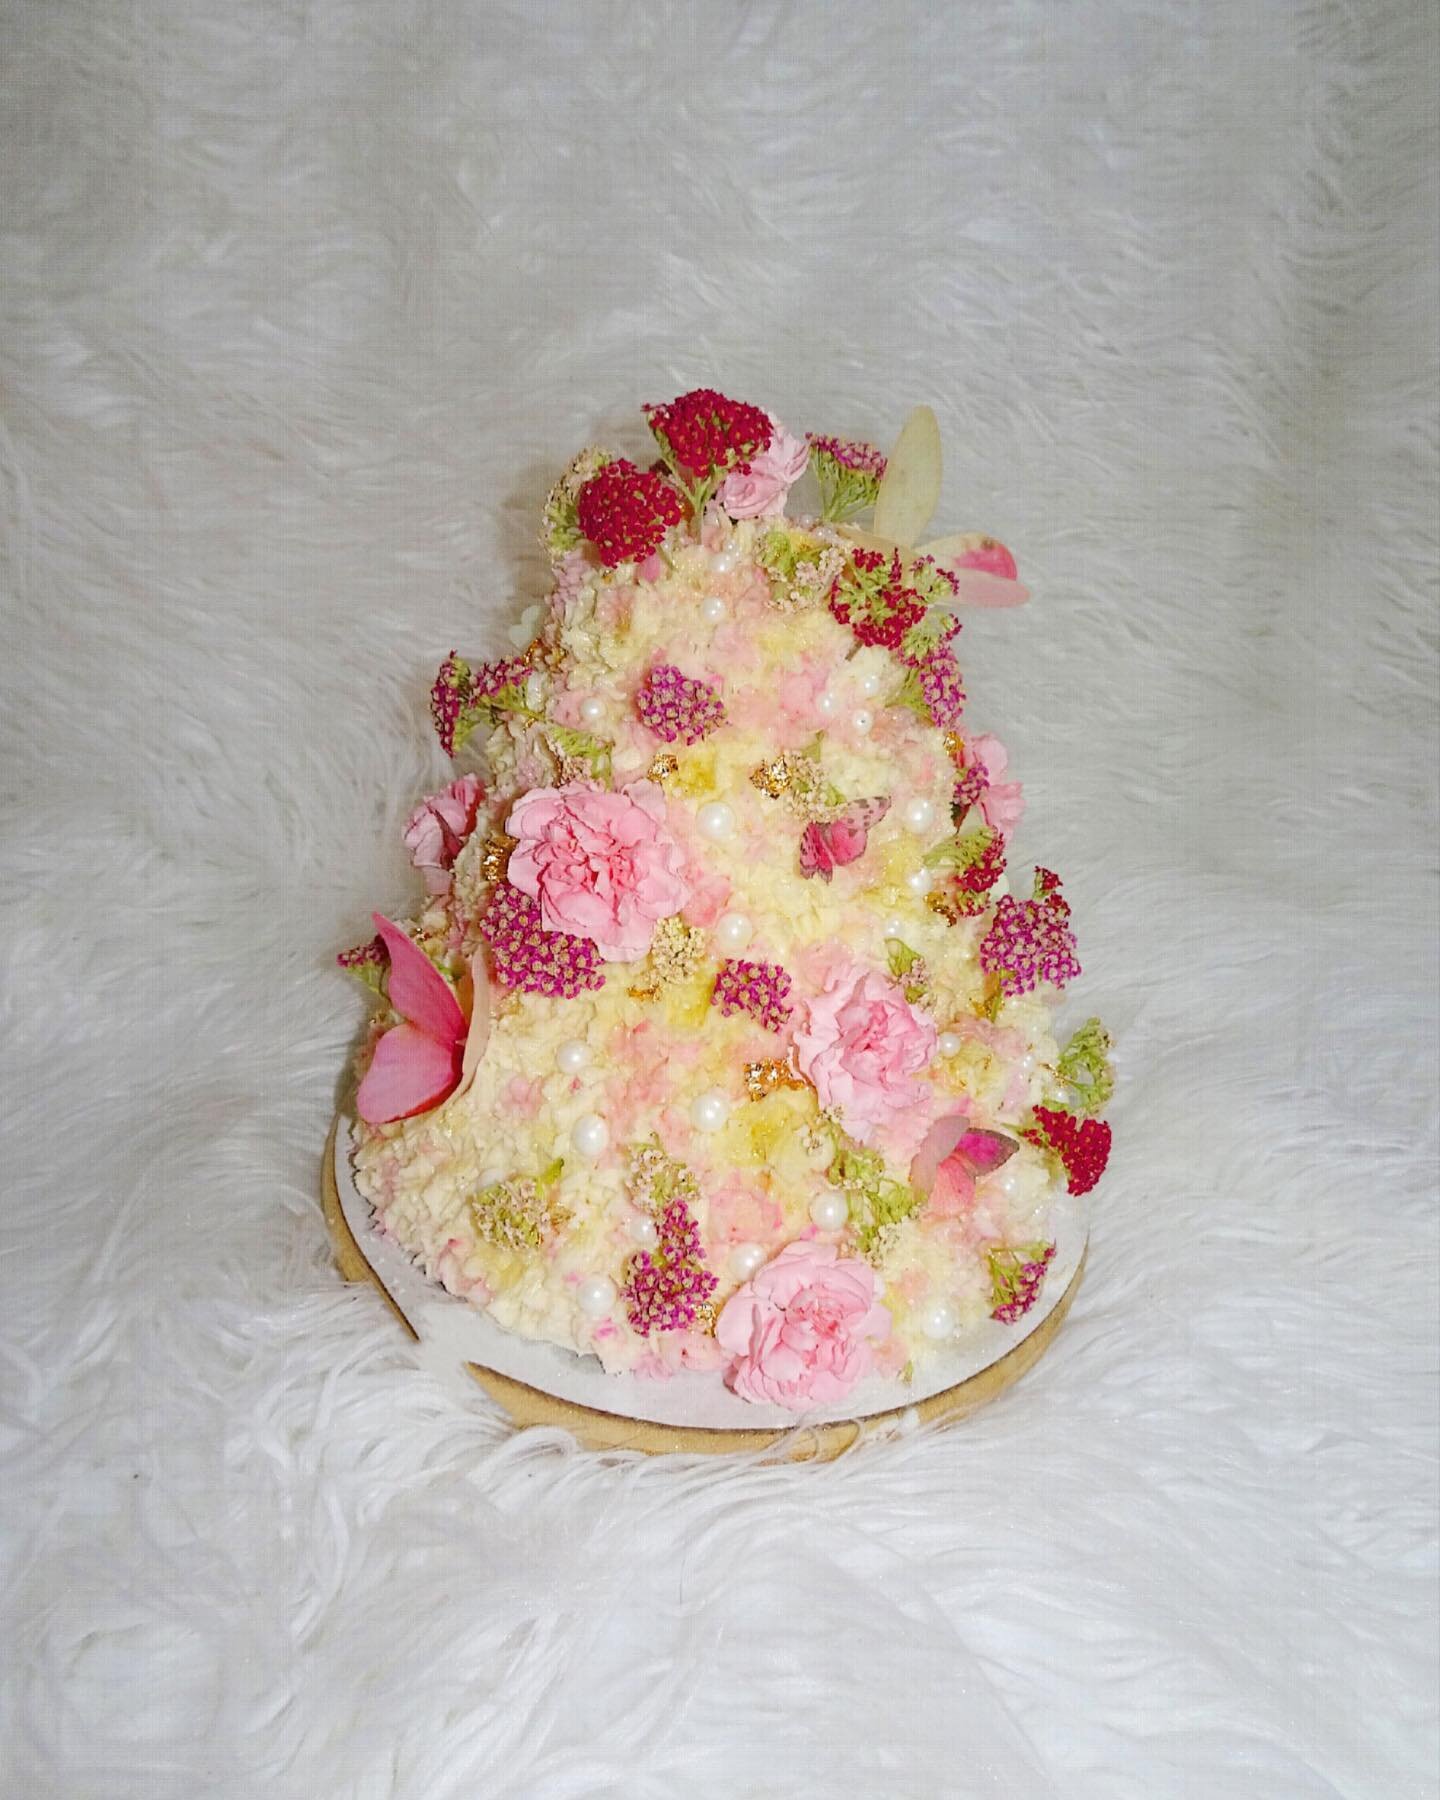 🤍𝓑𝓵𝓾𝓼𝓱𝓲𝓷𝓰 𝓹𝓲𝓷𝓴 𝓭𝓻𝓮𝓪𝓶🤍 full size lemon and vanilla cake 🎂 

#cake #cakedecorating #cakes #birthdaycake #chocolate #food #dessert #cakesofinstagram #birthday #cakedesign #instafood #baking #foodporn #yummy #cakestagram #homemade #lo